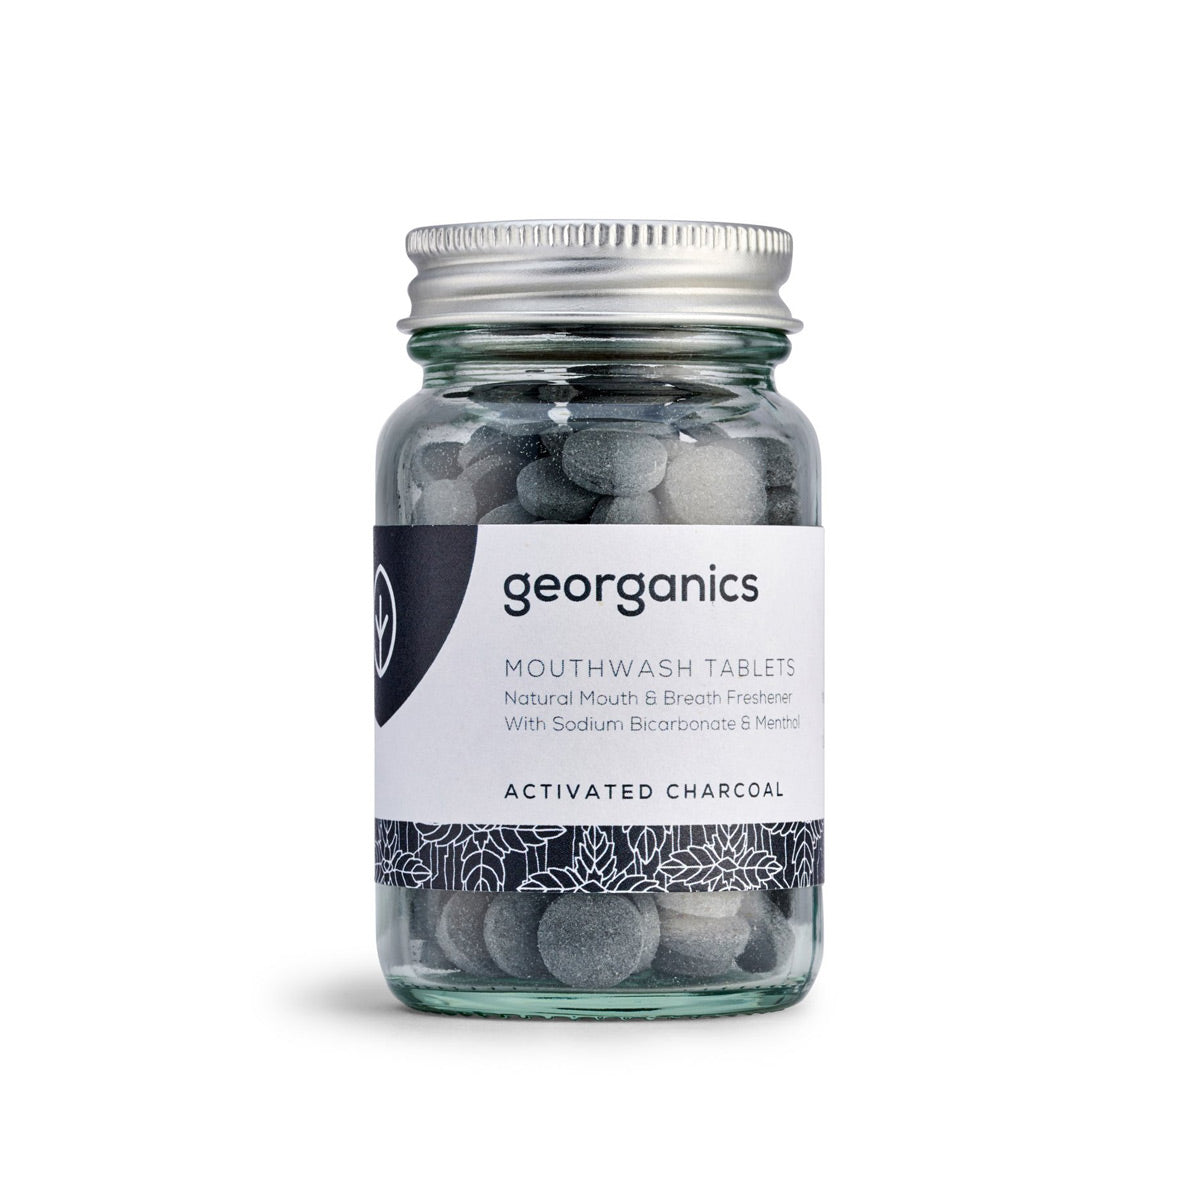 Georganics Mouthwash Tablets Charcoal